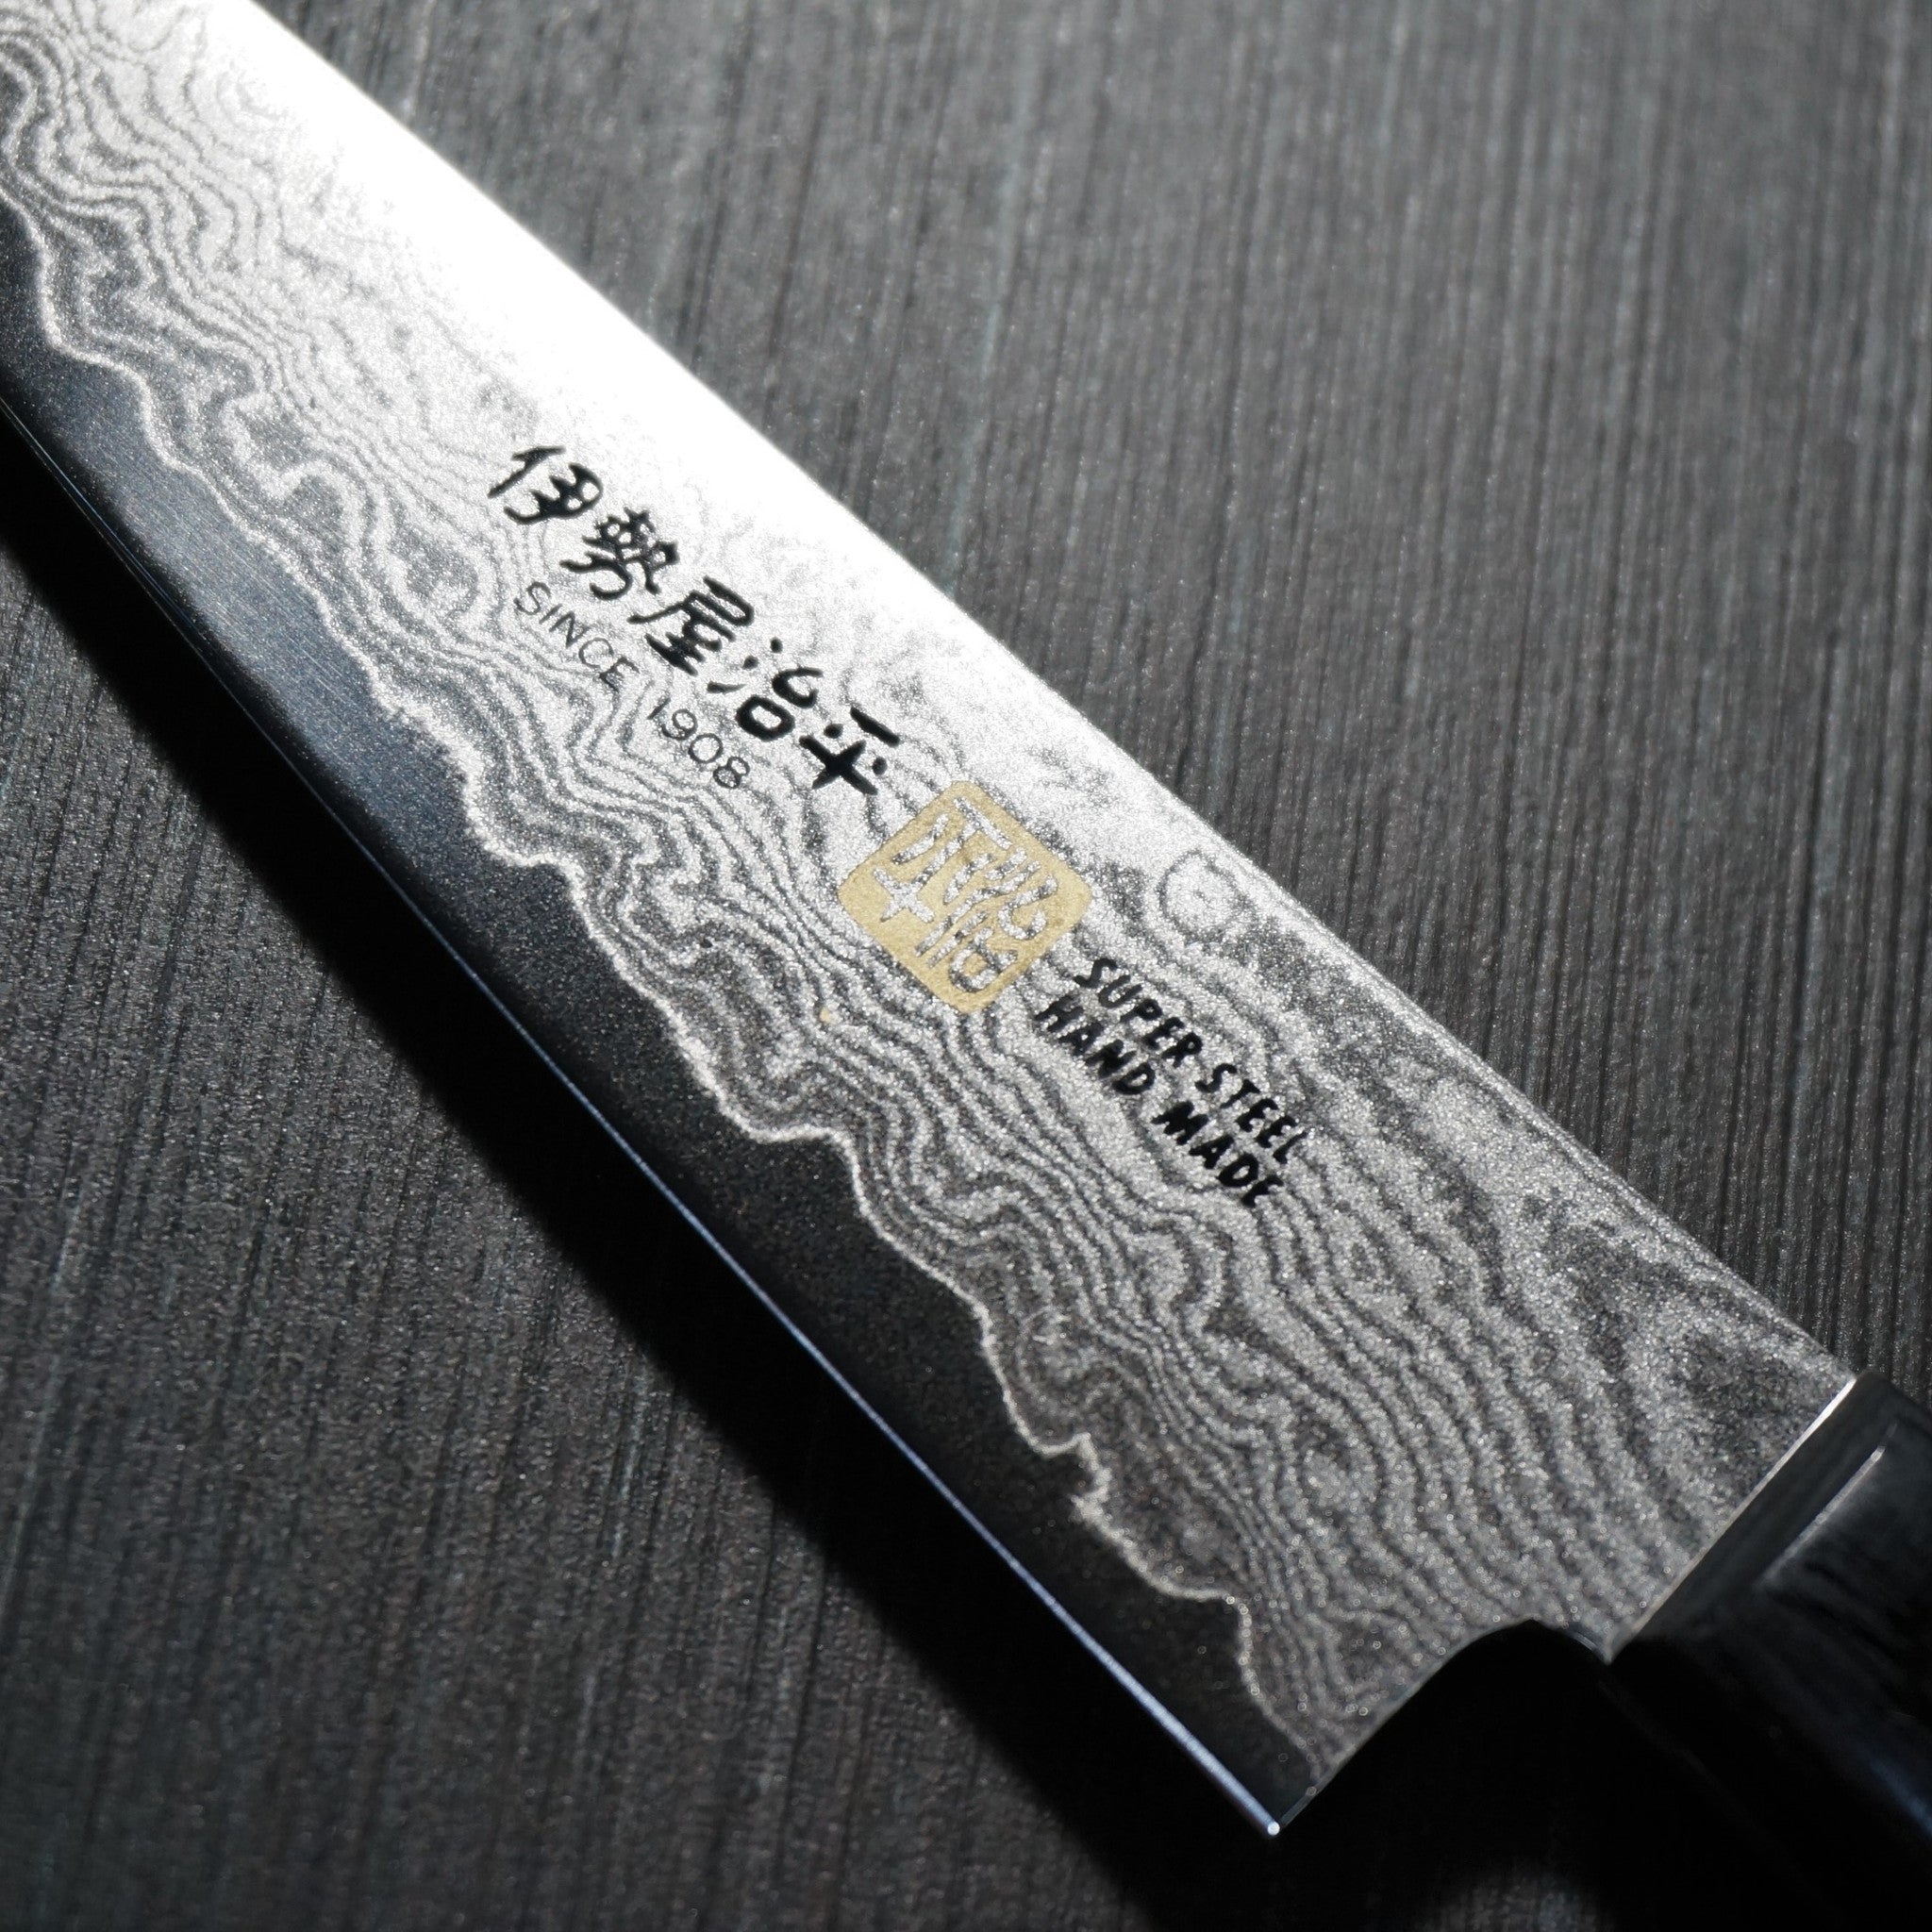 Iseya G-series 33 Layer VG-10 Damascus Japanese Chef's Knife SET